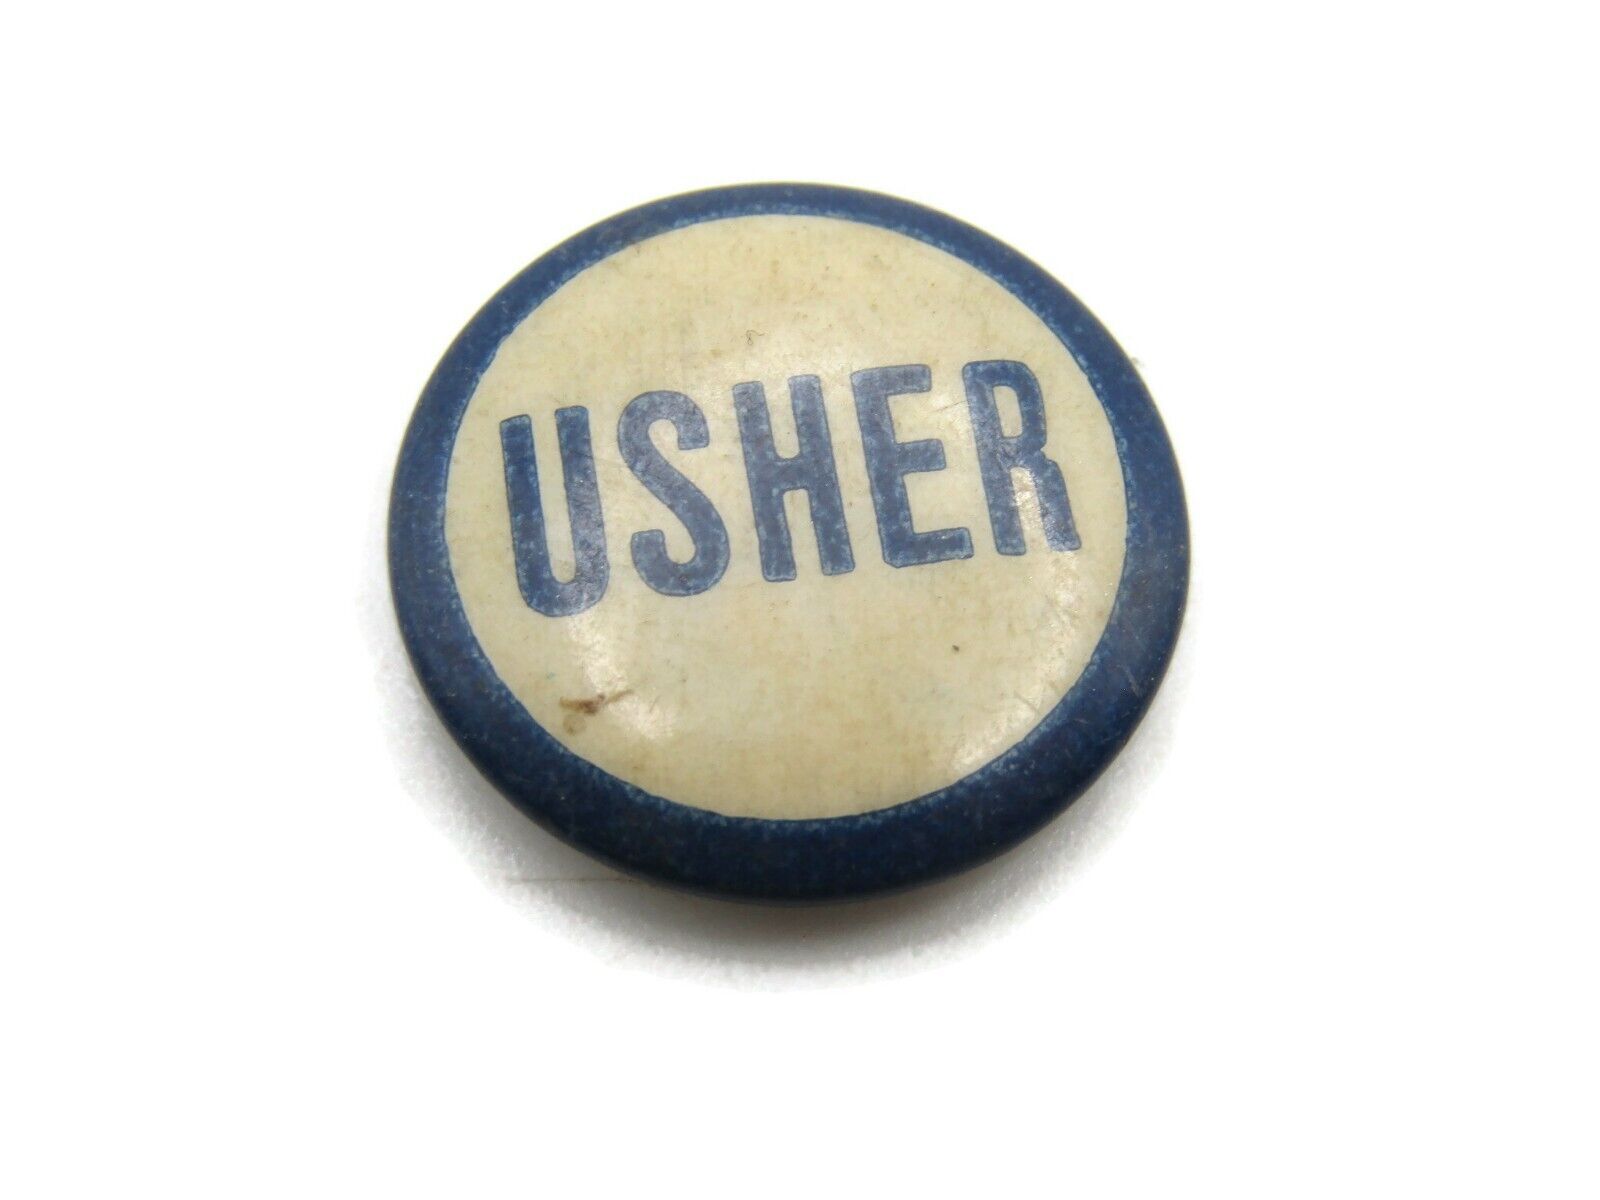 Usher Lettered Button Blue & White Missing Backing